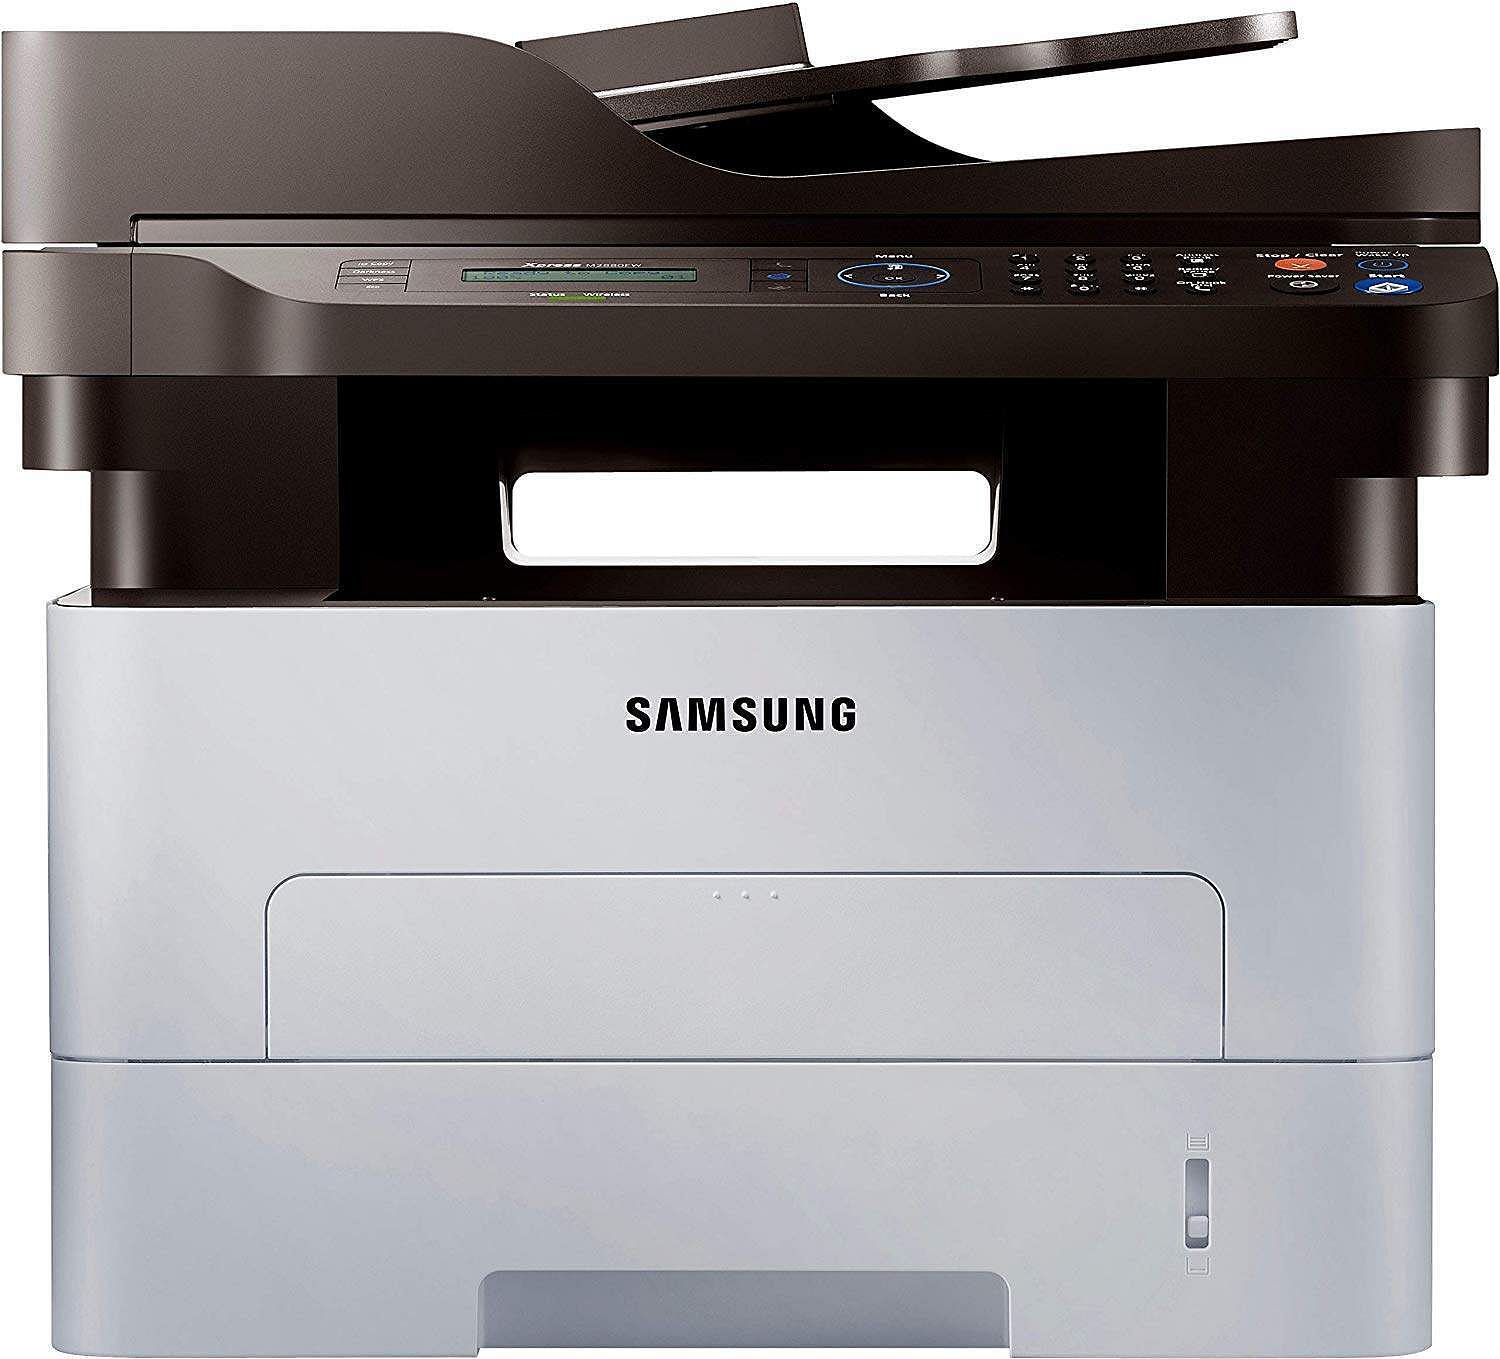 The Samsung Xpress Laser Printer (Image via Amazon)